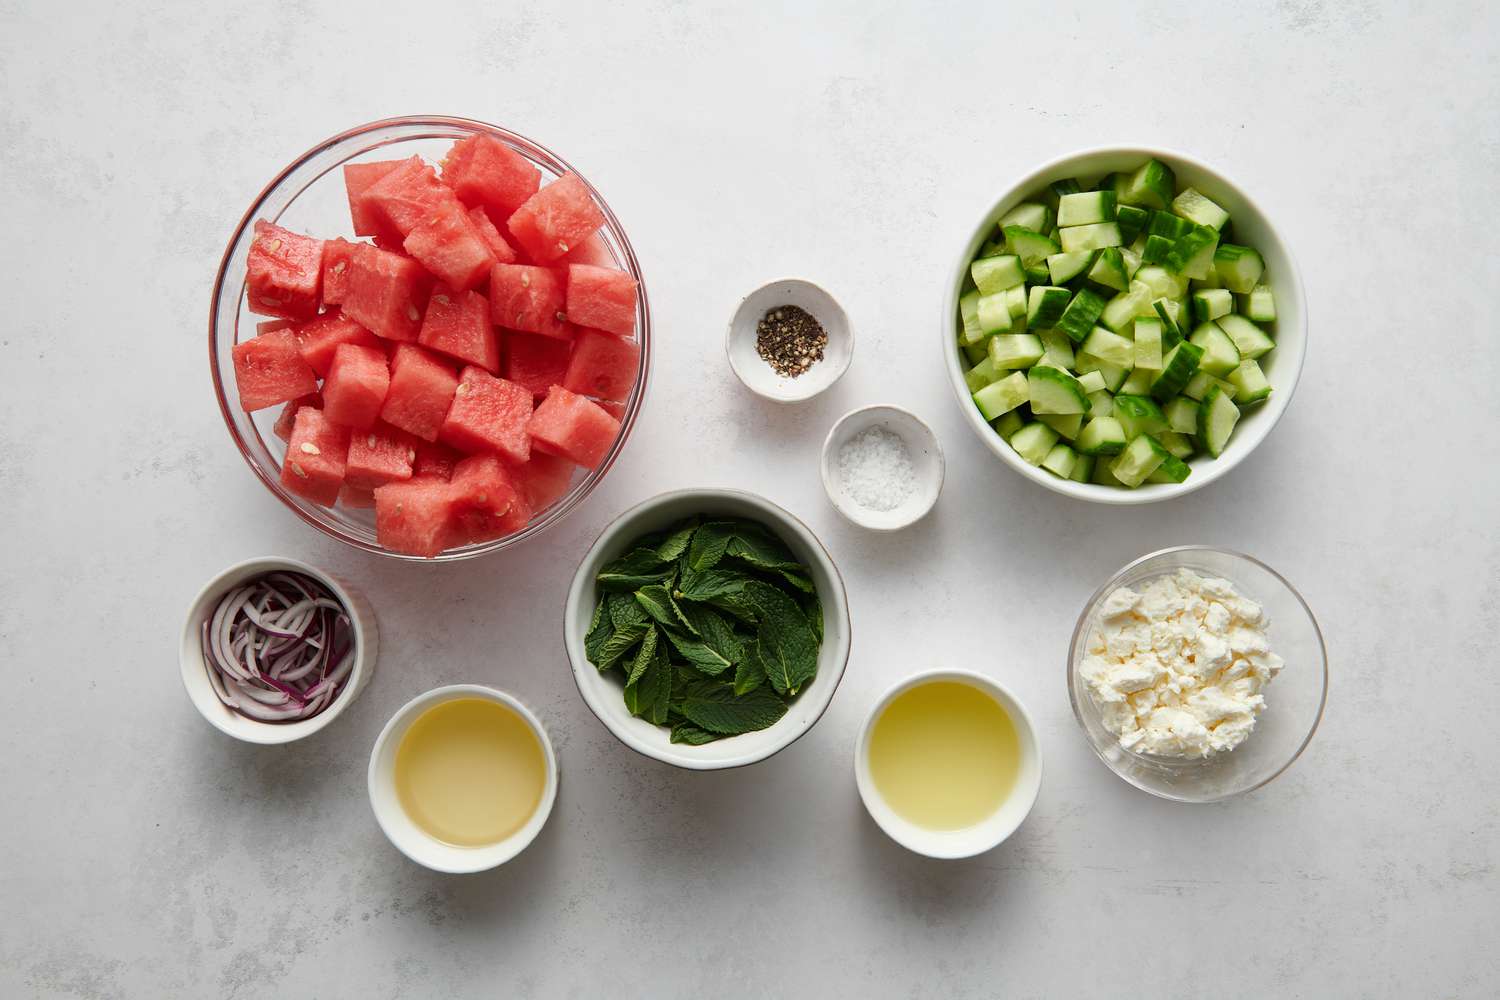 Ingredients to make watermelon salad